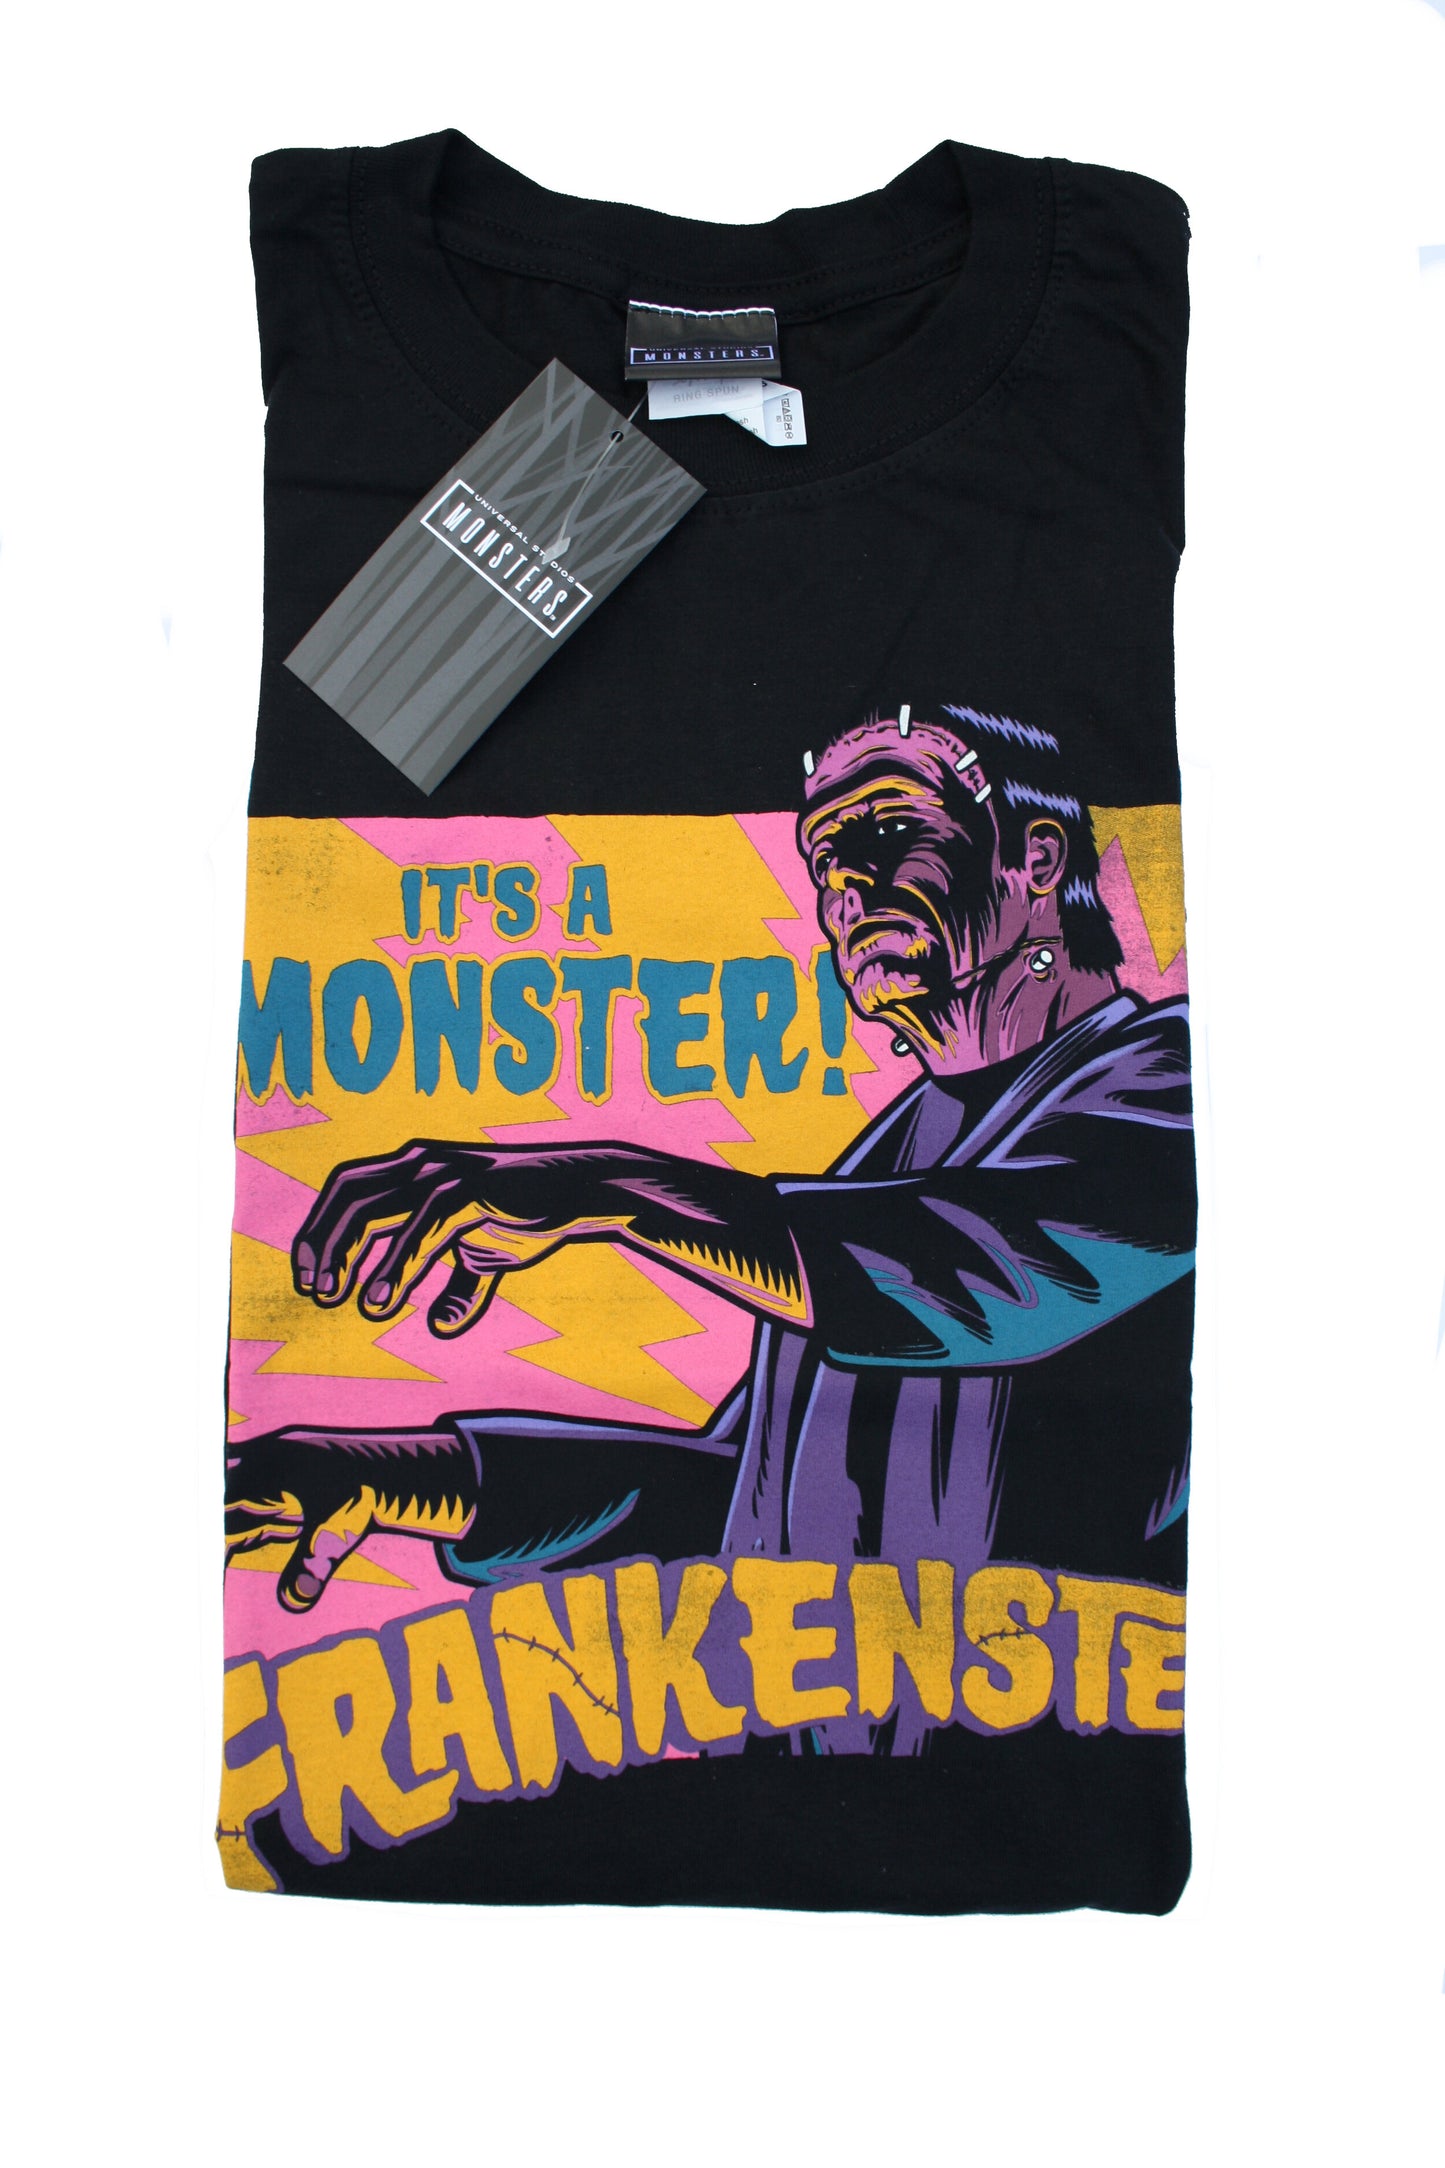 Universal Monsters - Frankenstein Unisex T-Shirt